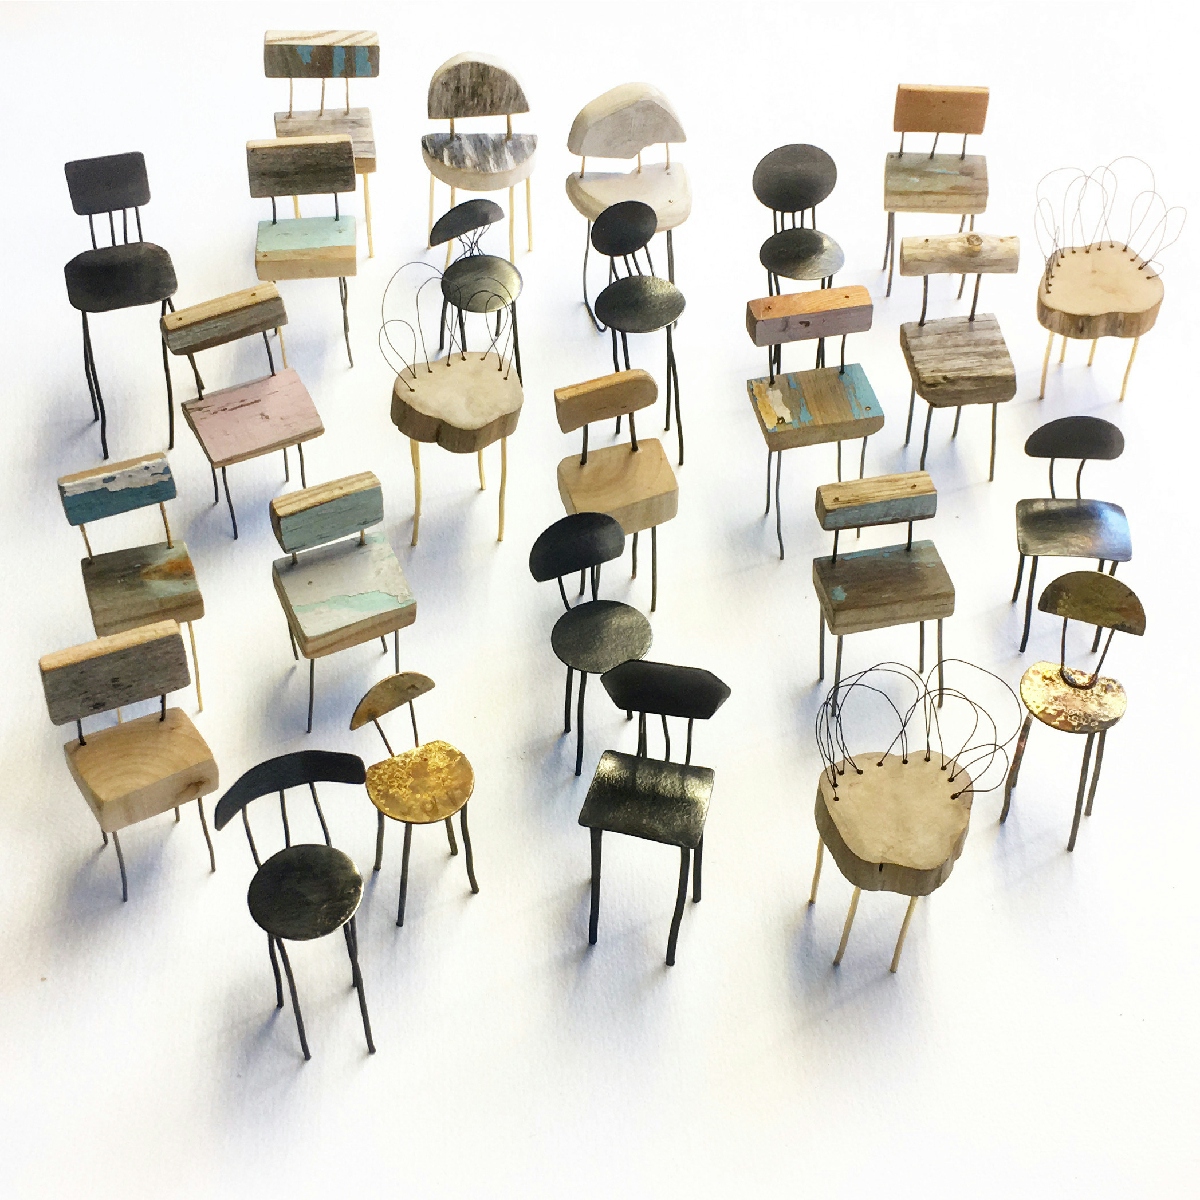 Miniature chairs. Mixed media. 7cm high. 